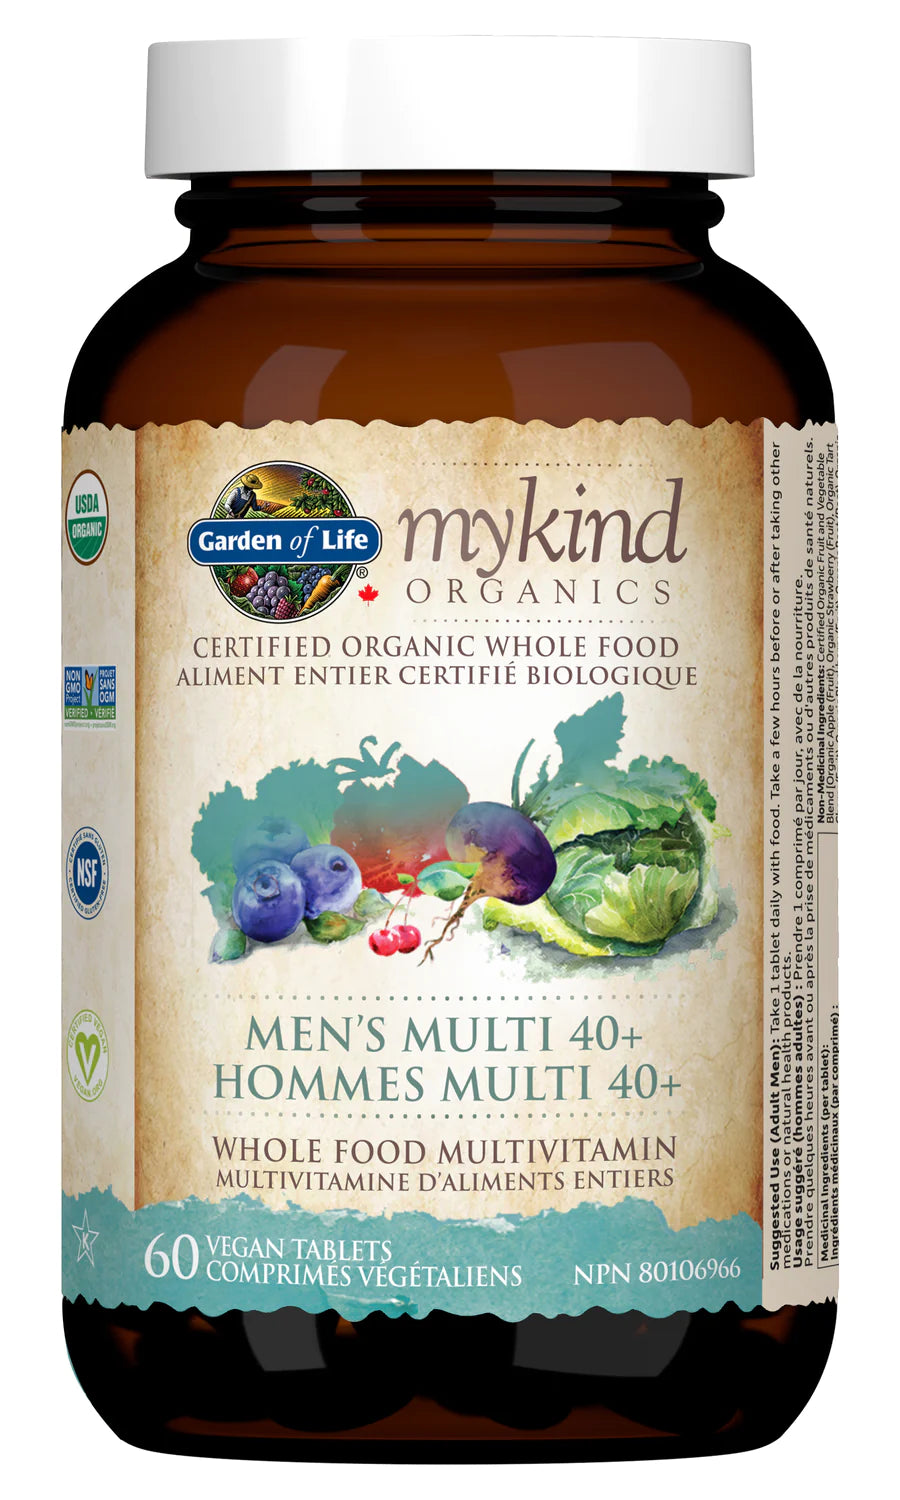 Garden of Life - mykind Organics - Men’s Multi 40+ 60 Veg. Tablets